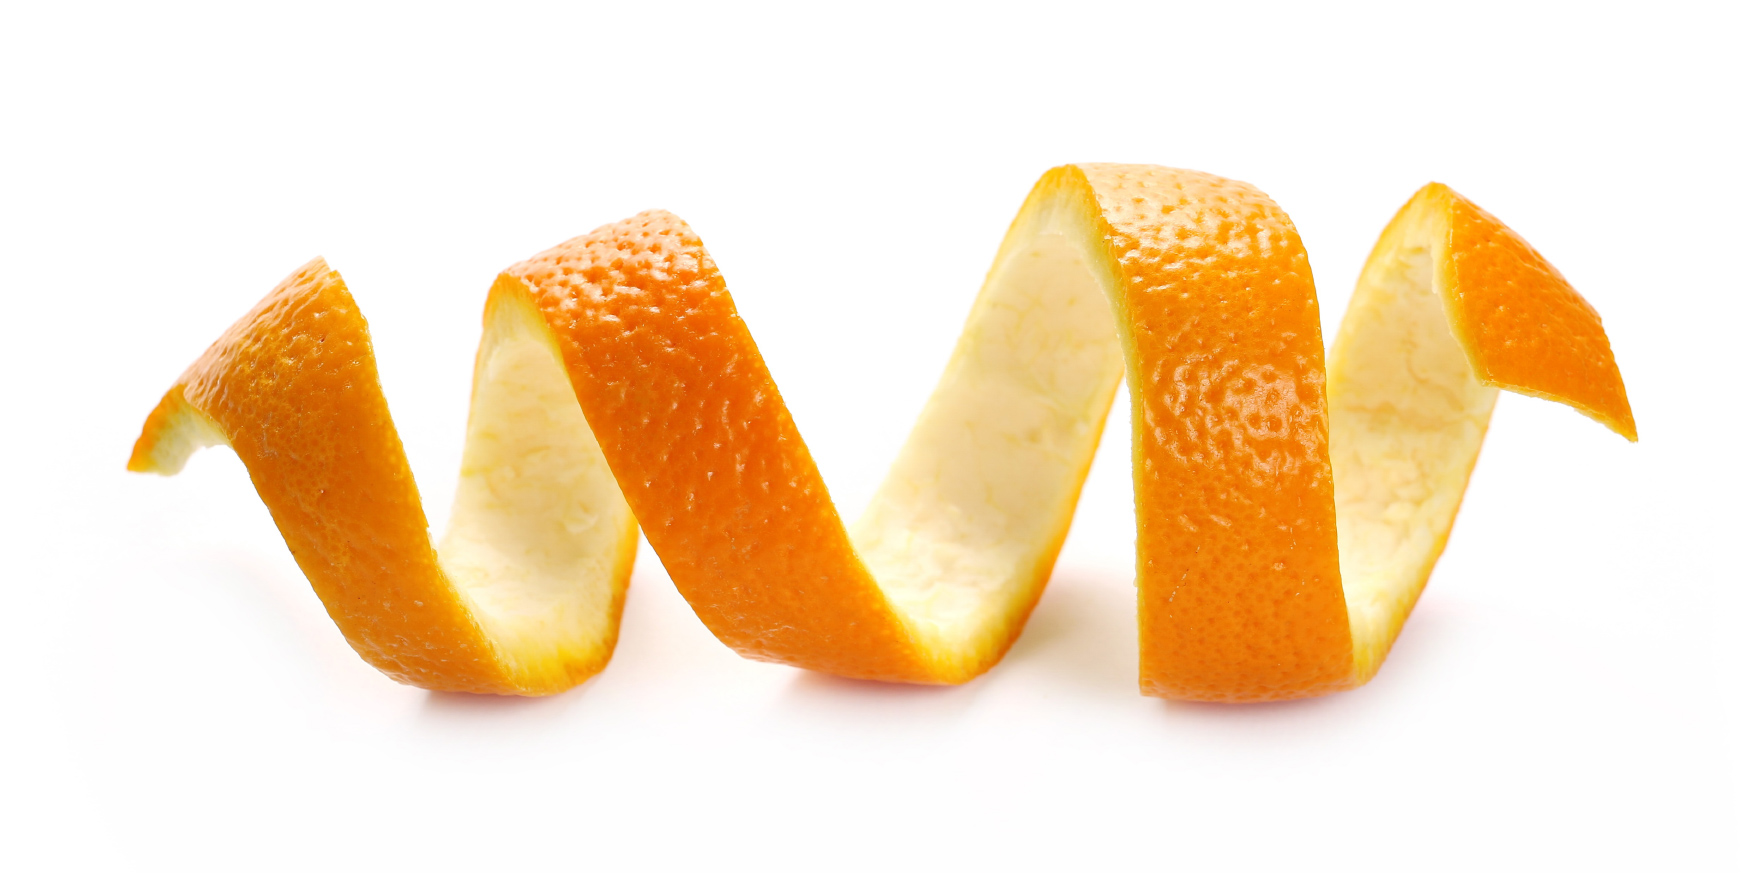 Bucce di arancia, come utilizzarle in casa e in cucina